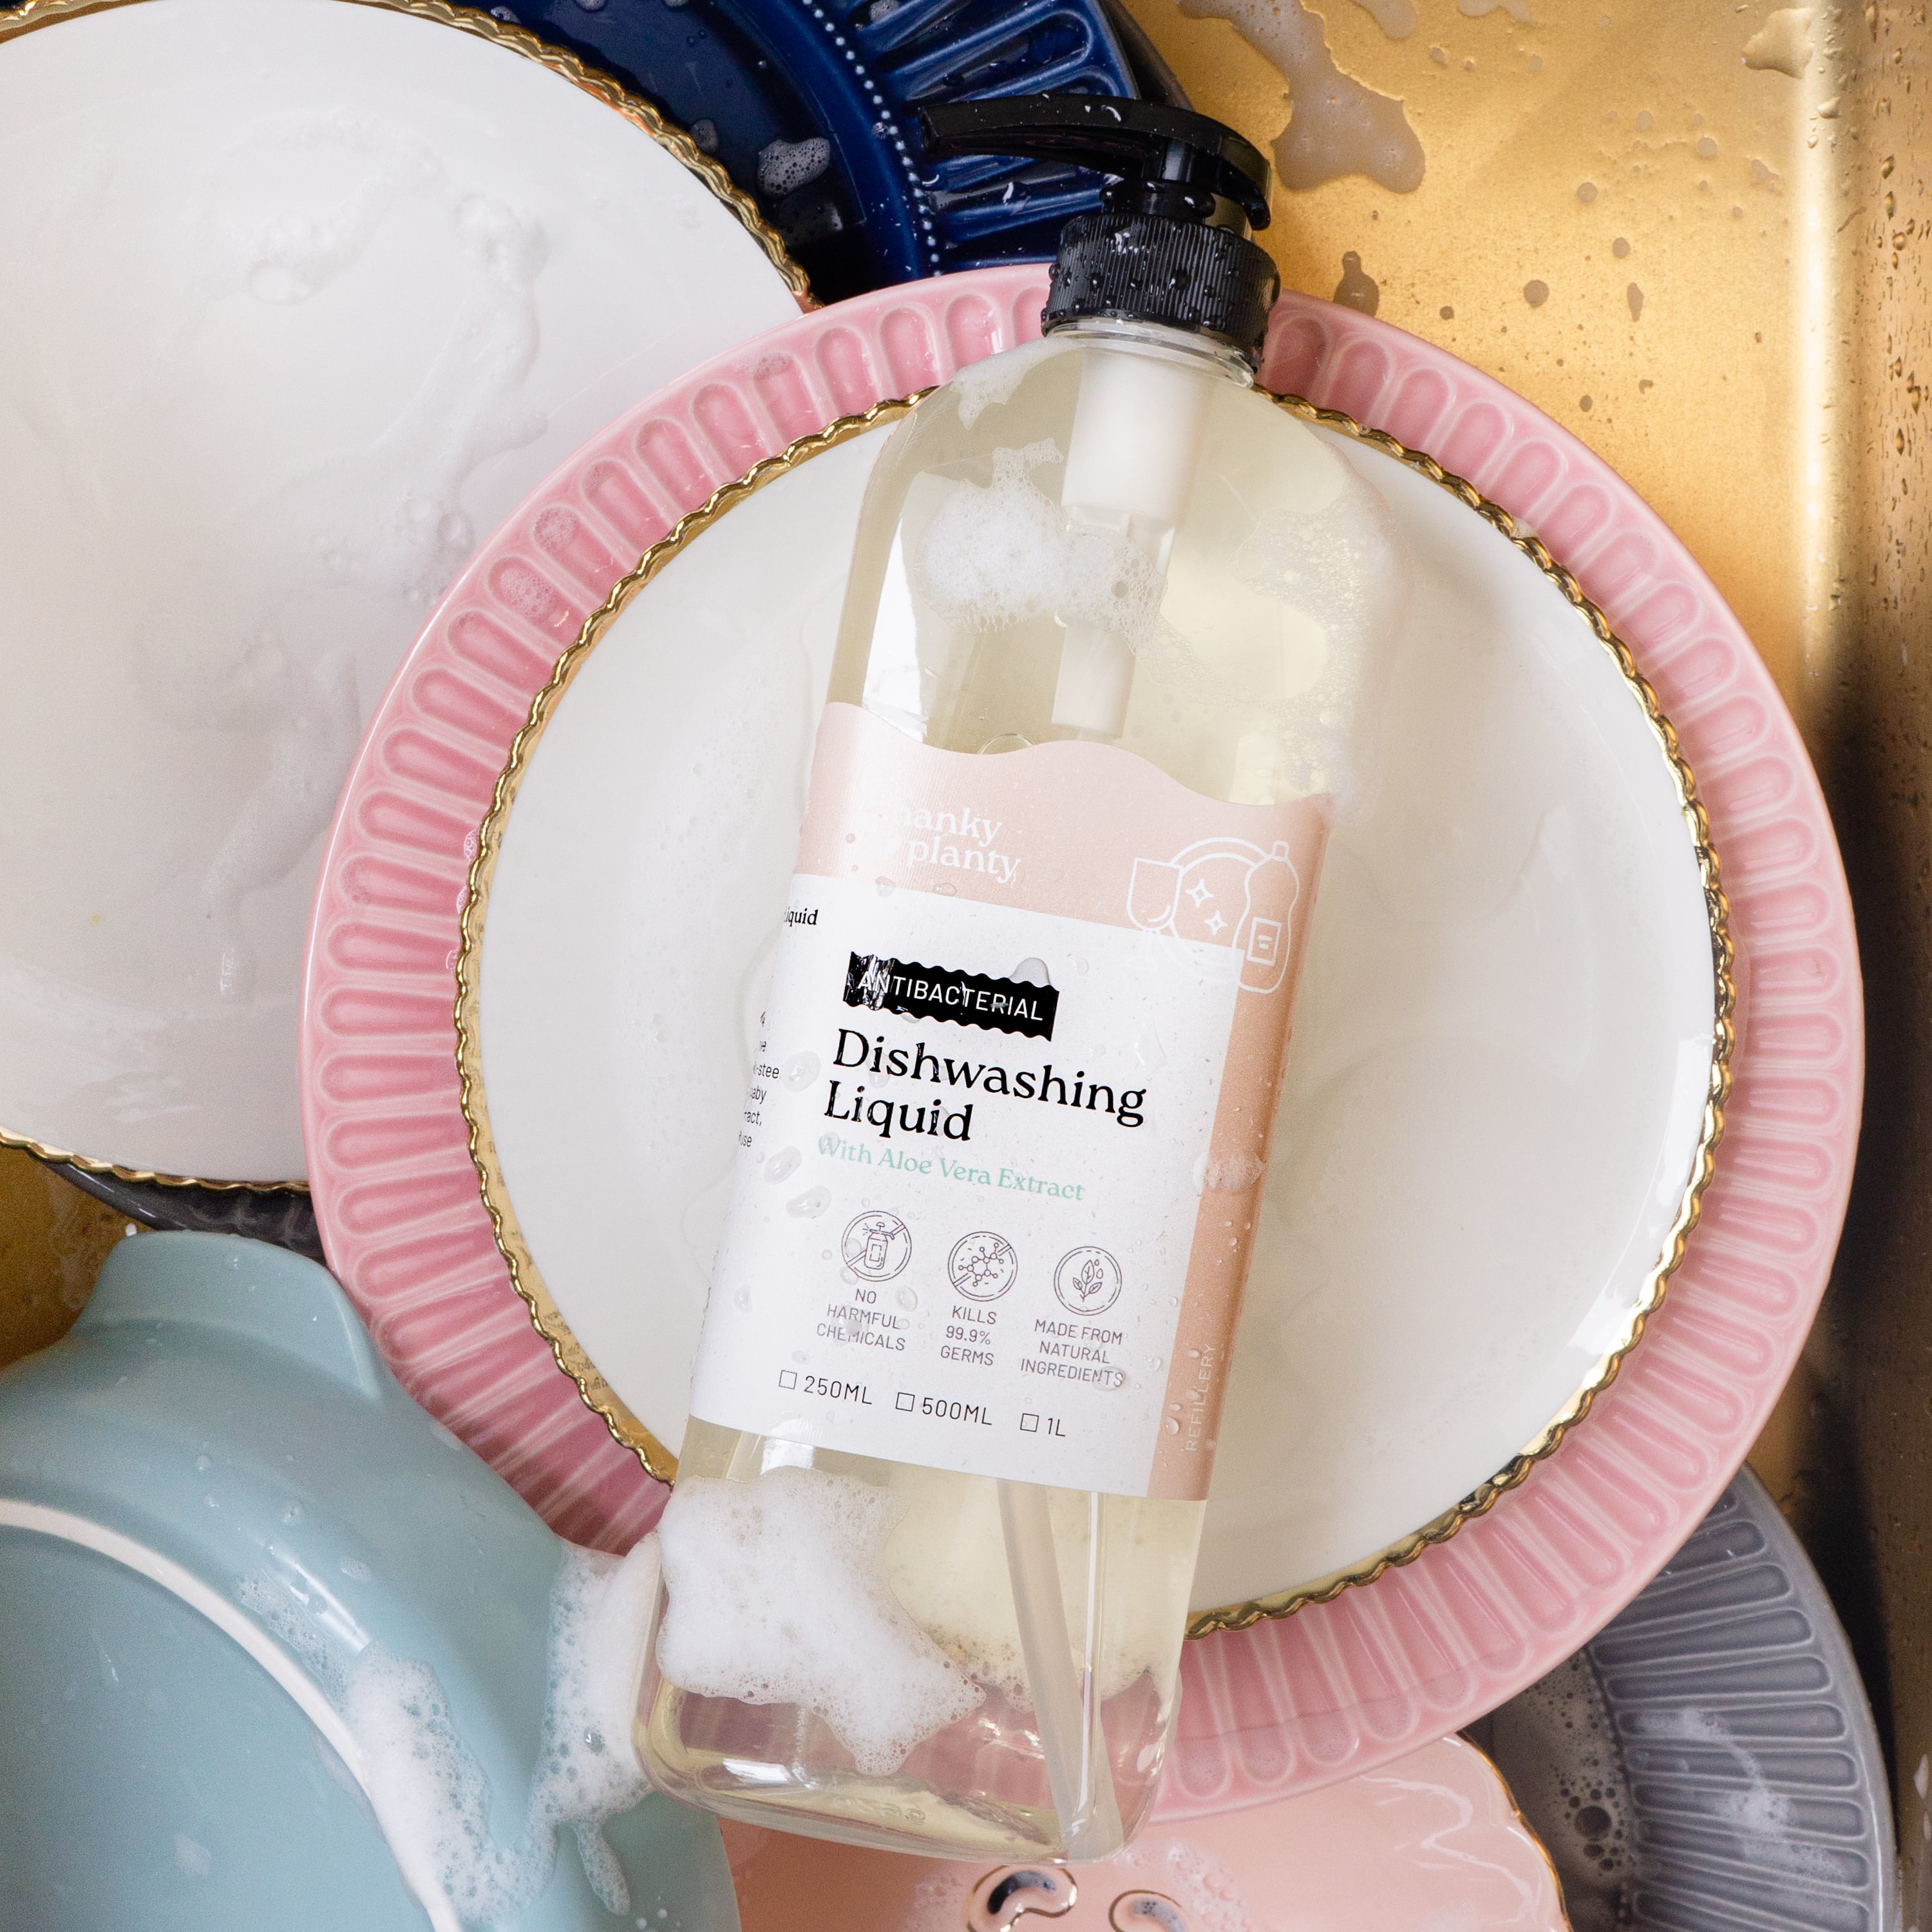 Antibacterial Dishwashing Liquid with Aloe Vera Extract